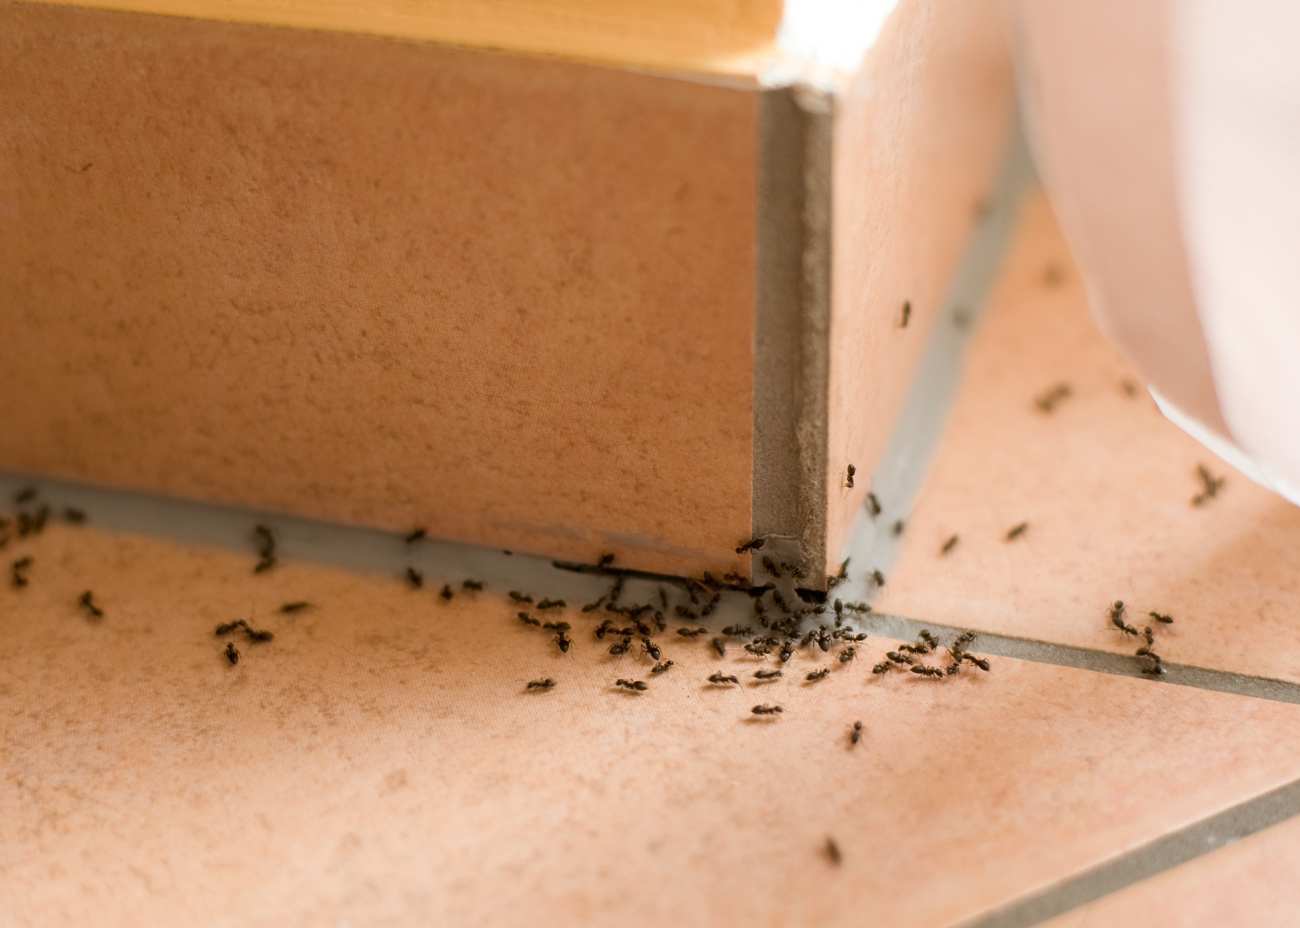 How to Kill Sugar Ants?